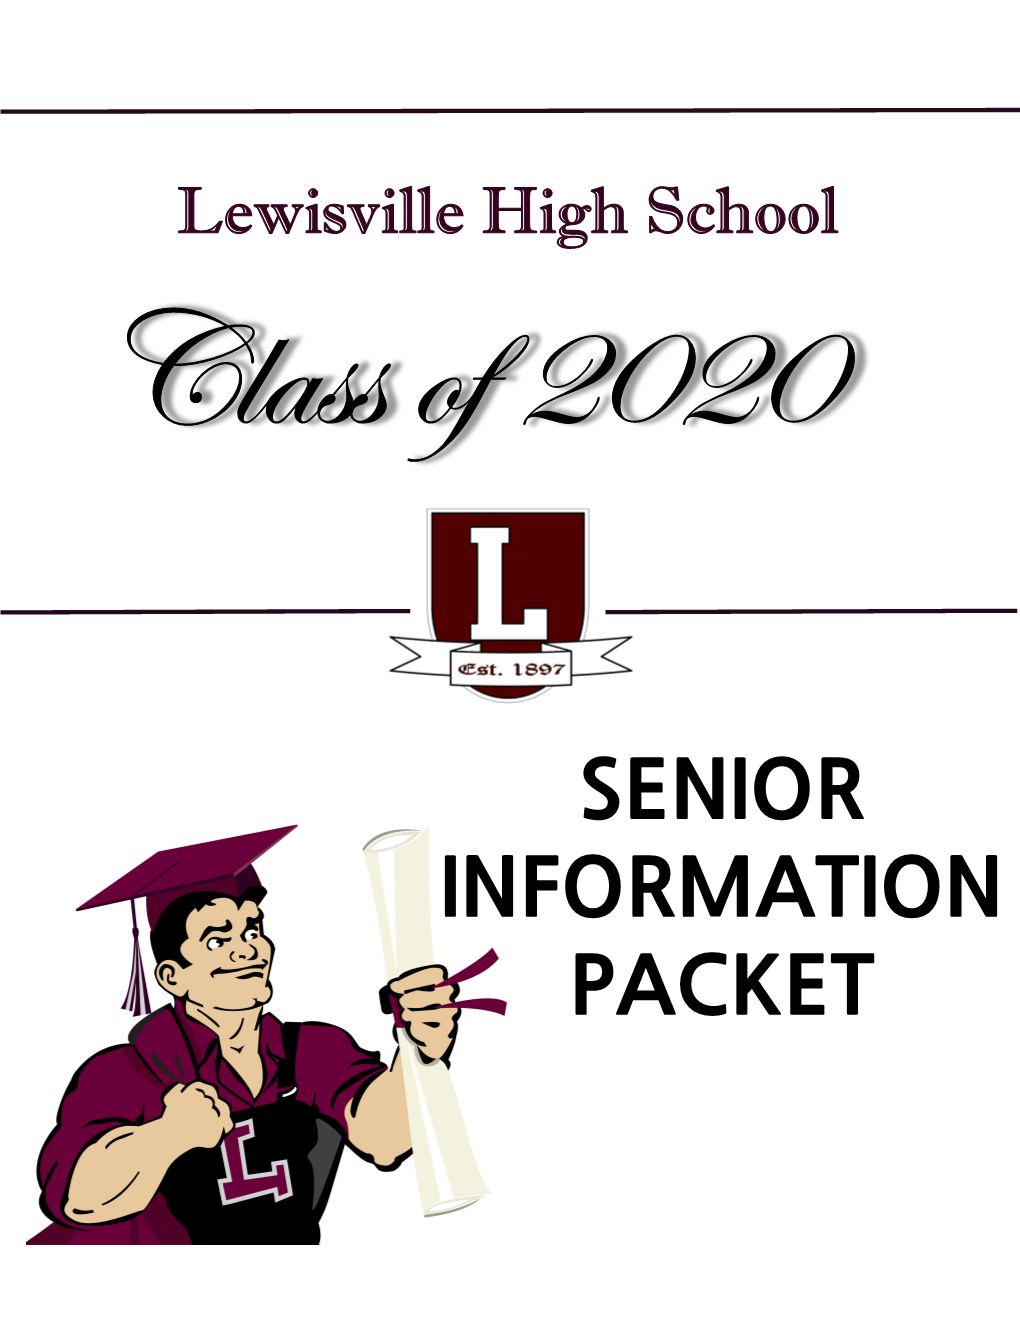 Senior Information Packet